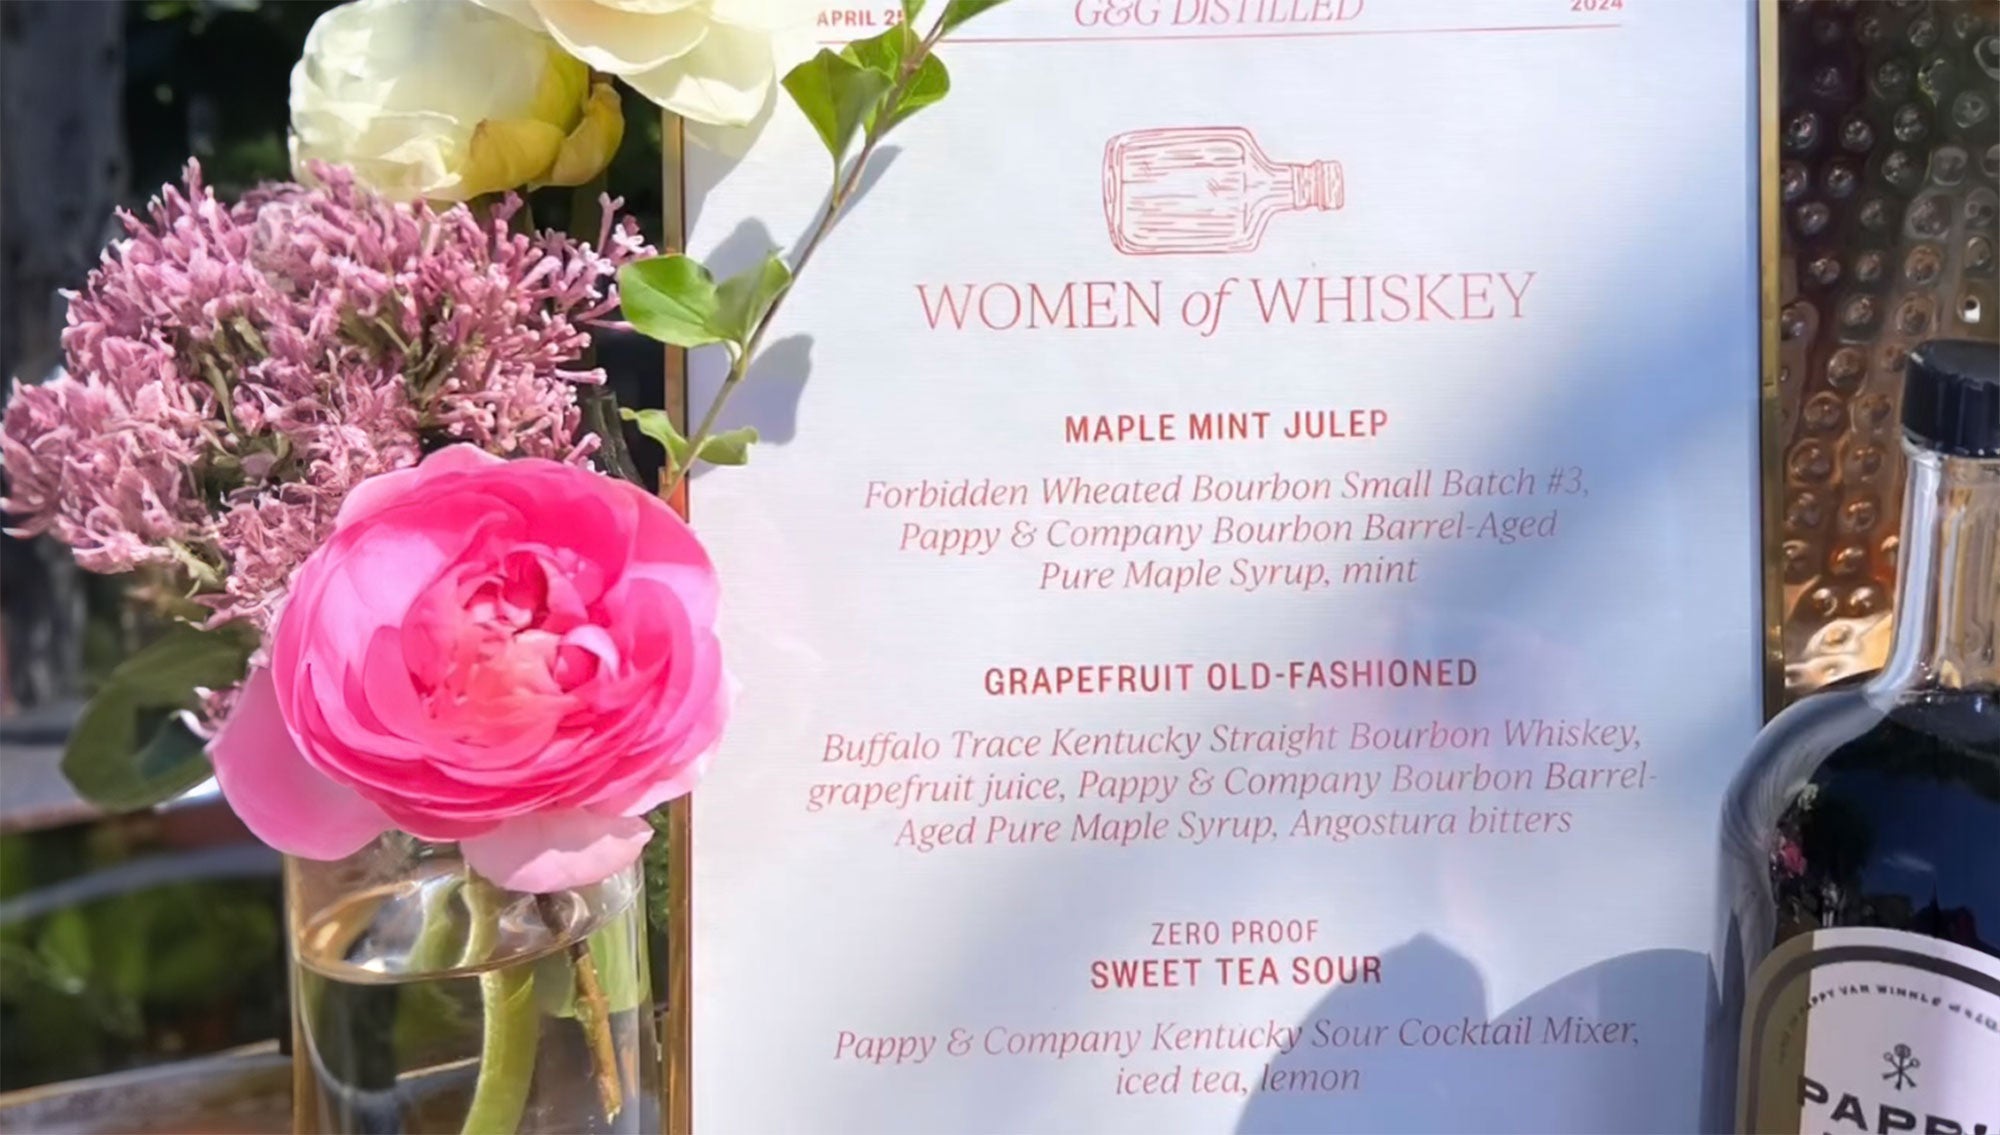 Garden & Gun honors the Women of Whiskey